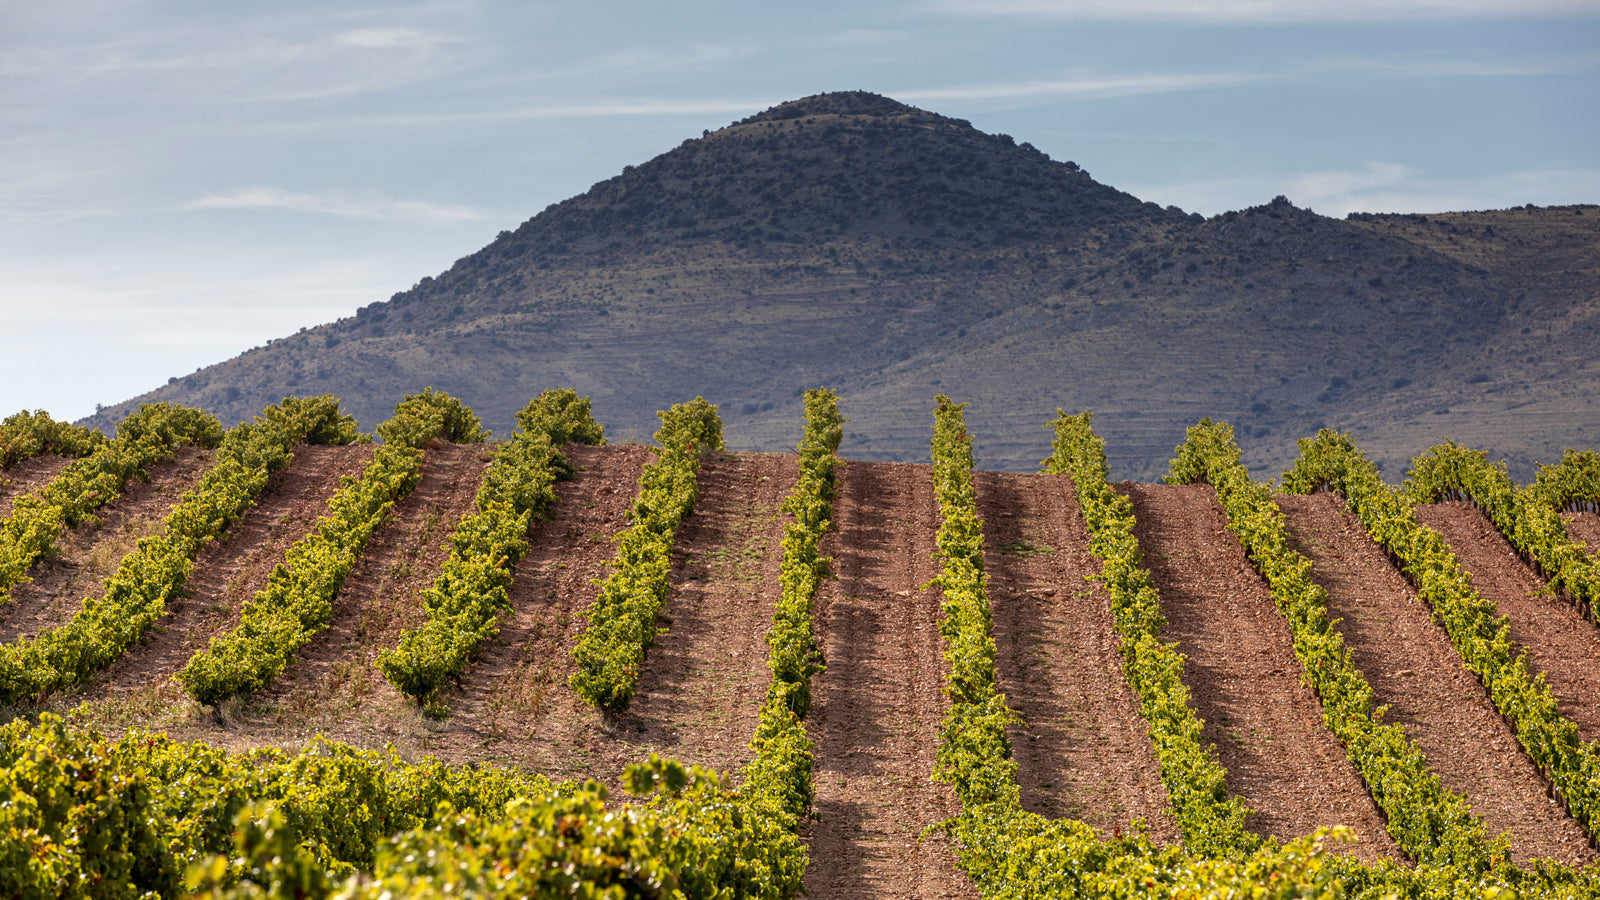 A vineyard in the Spanish wine region of Somontano